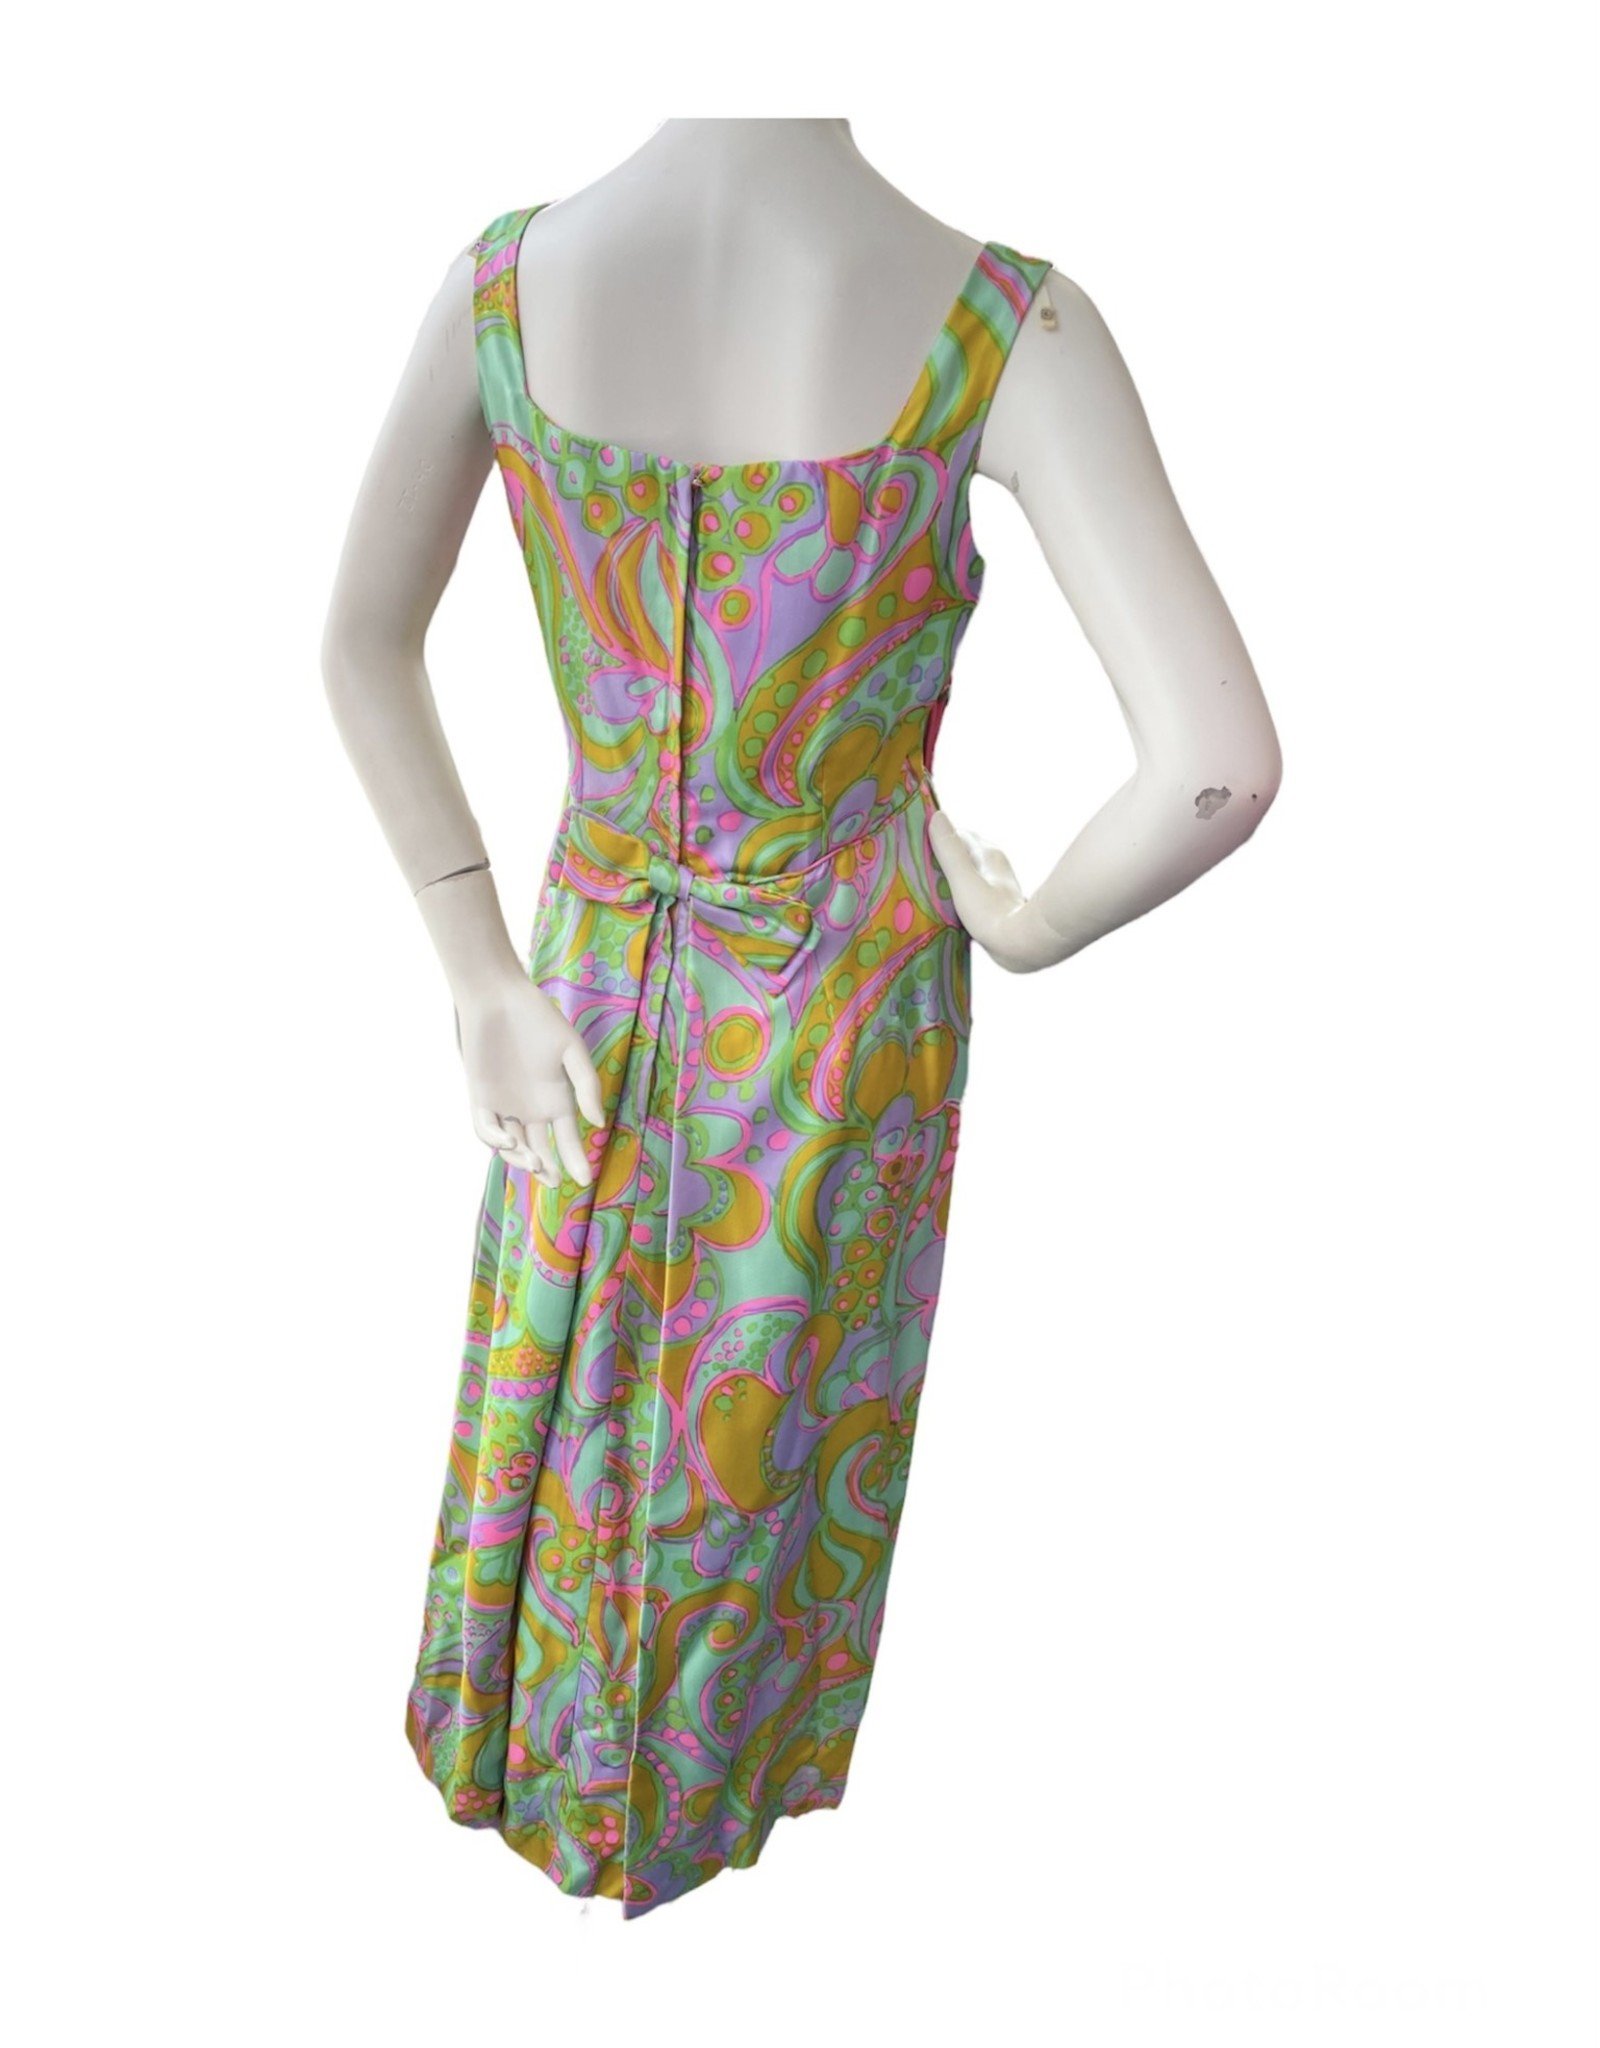 Gra Curtis Inc 60s  pastel floral srtap dress